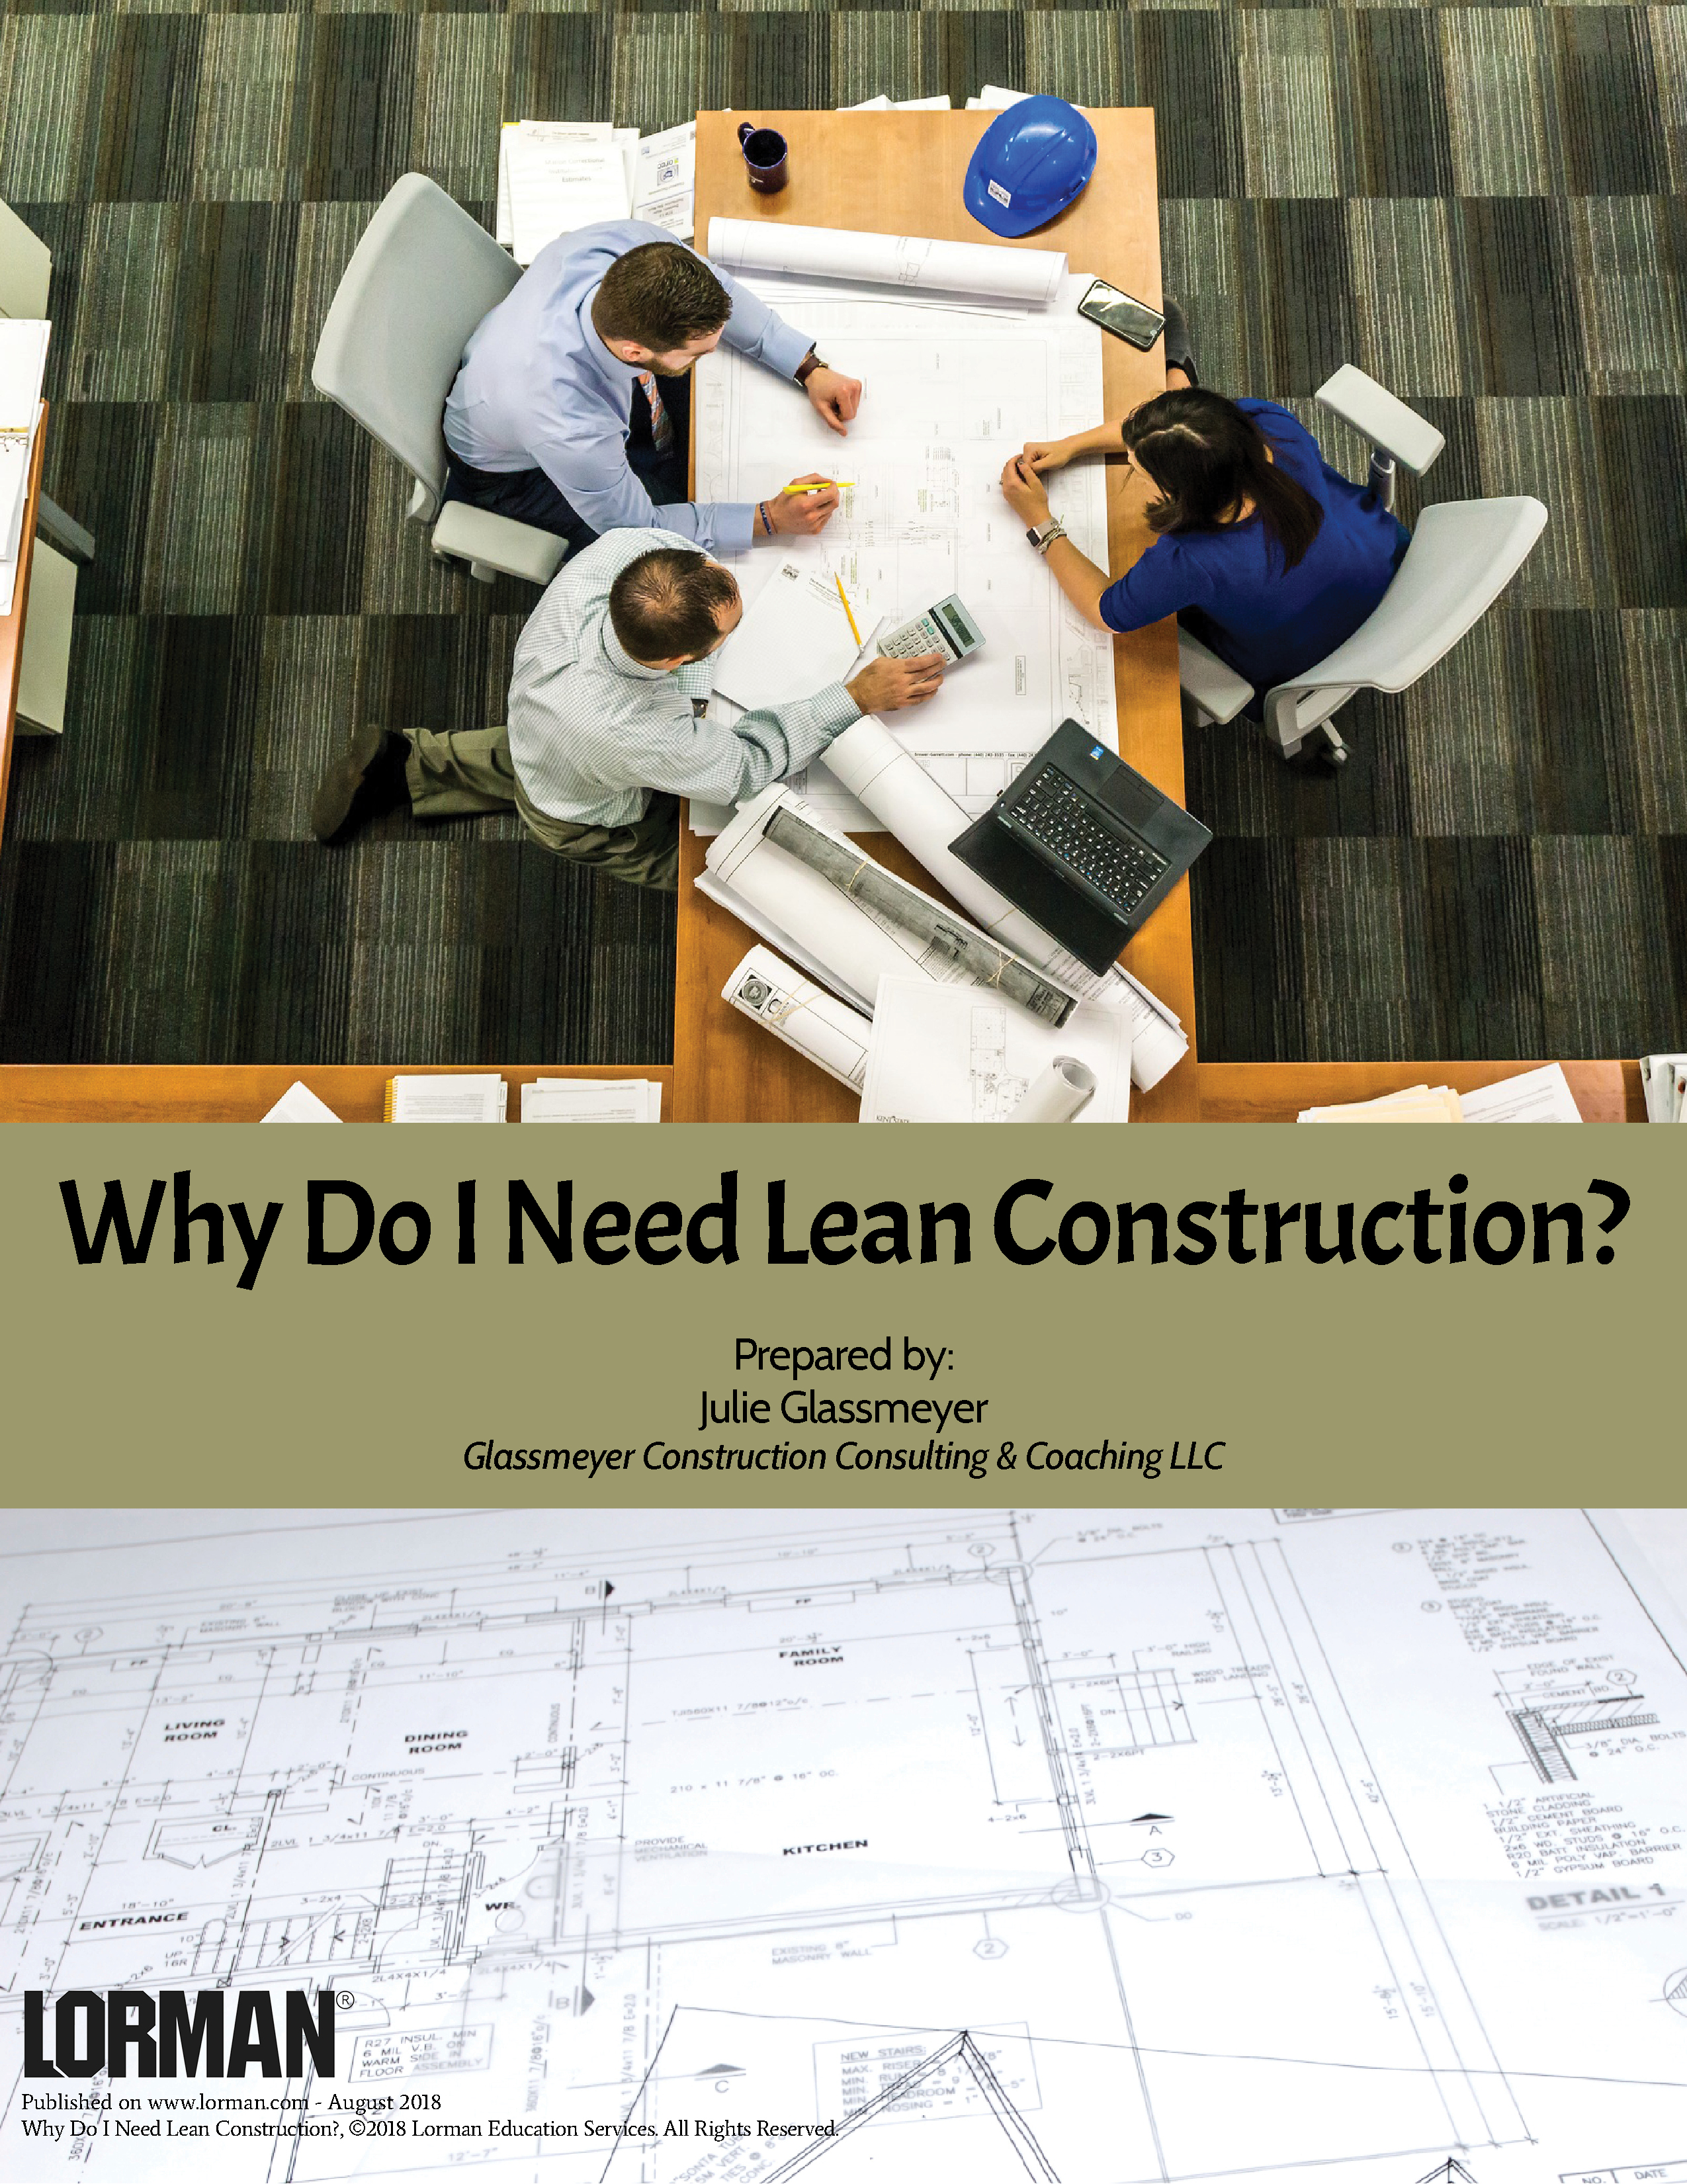 Why Do I Need Lean Construction?